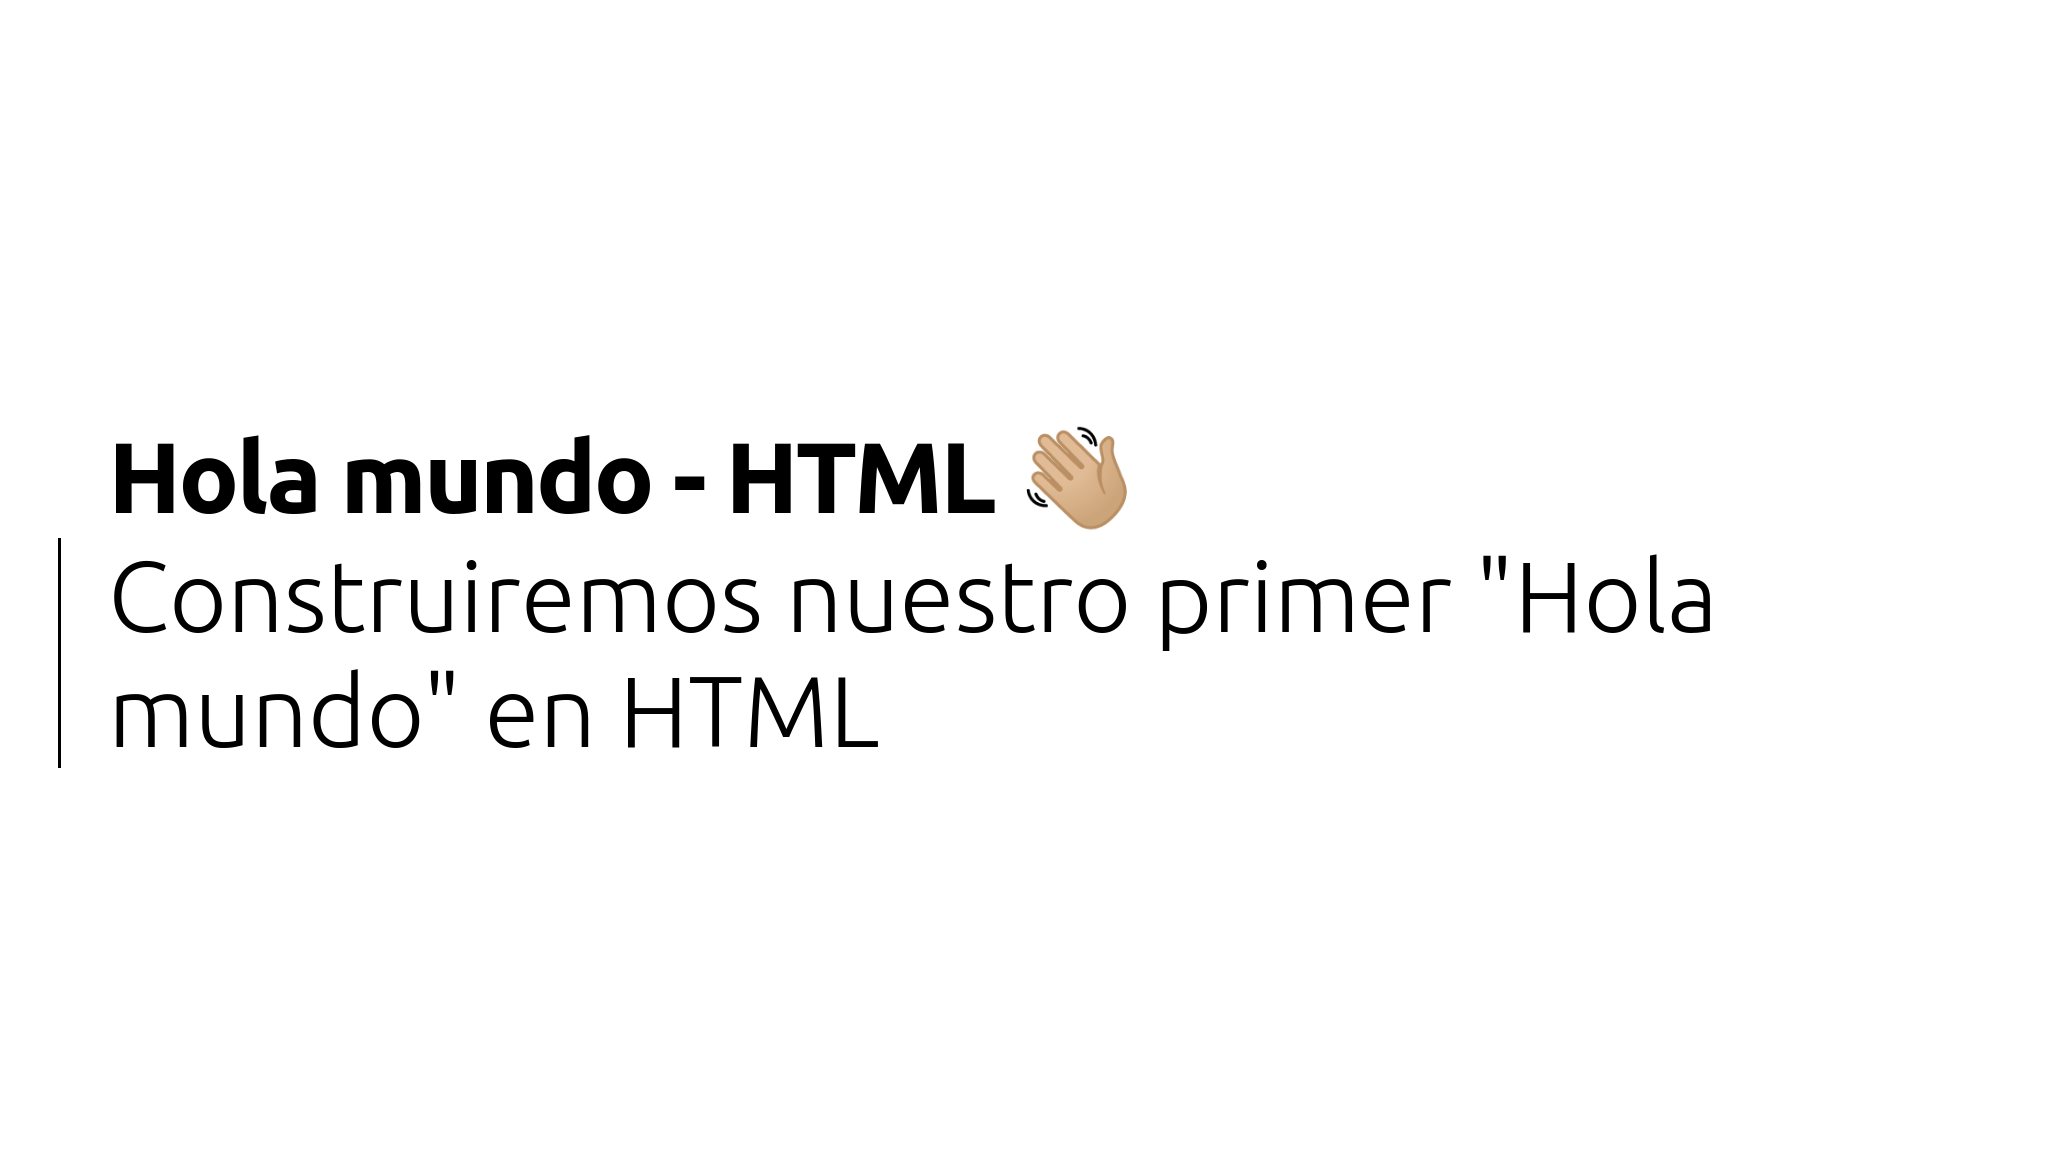 Hola mundo - HTML ?? - Paulo Tijero